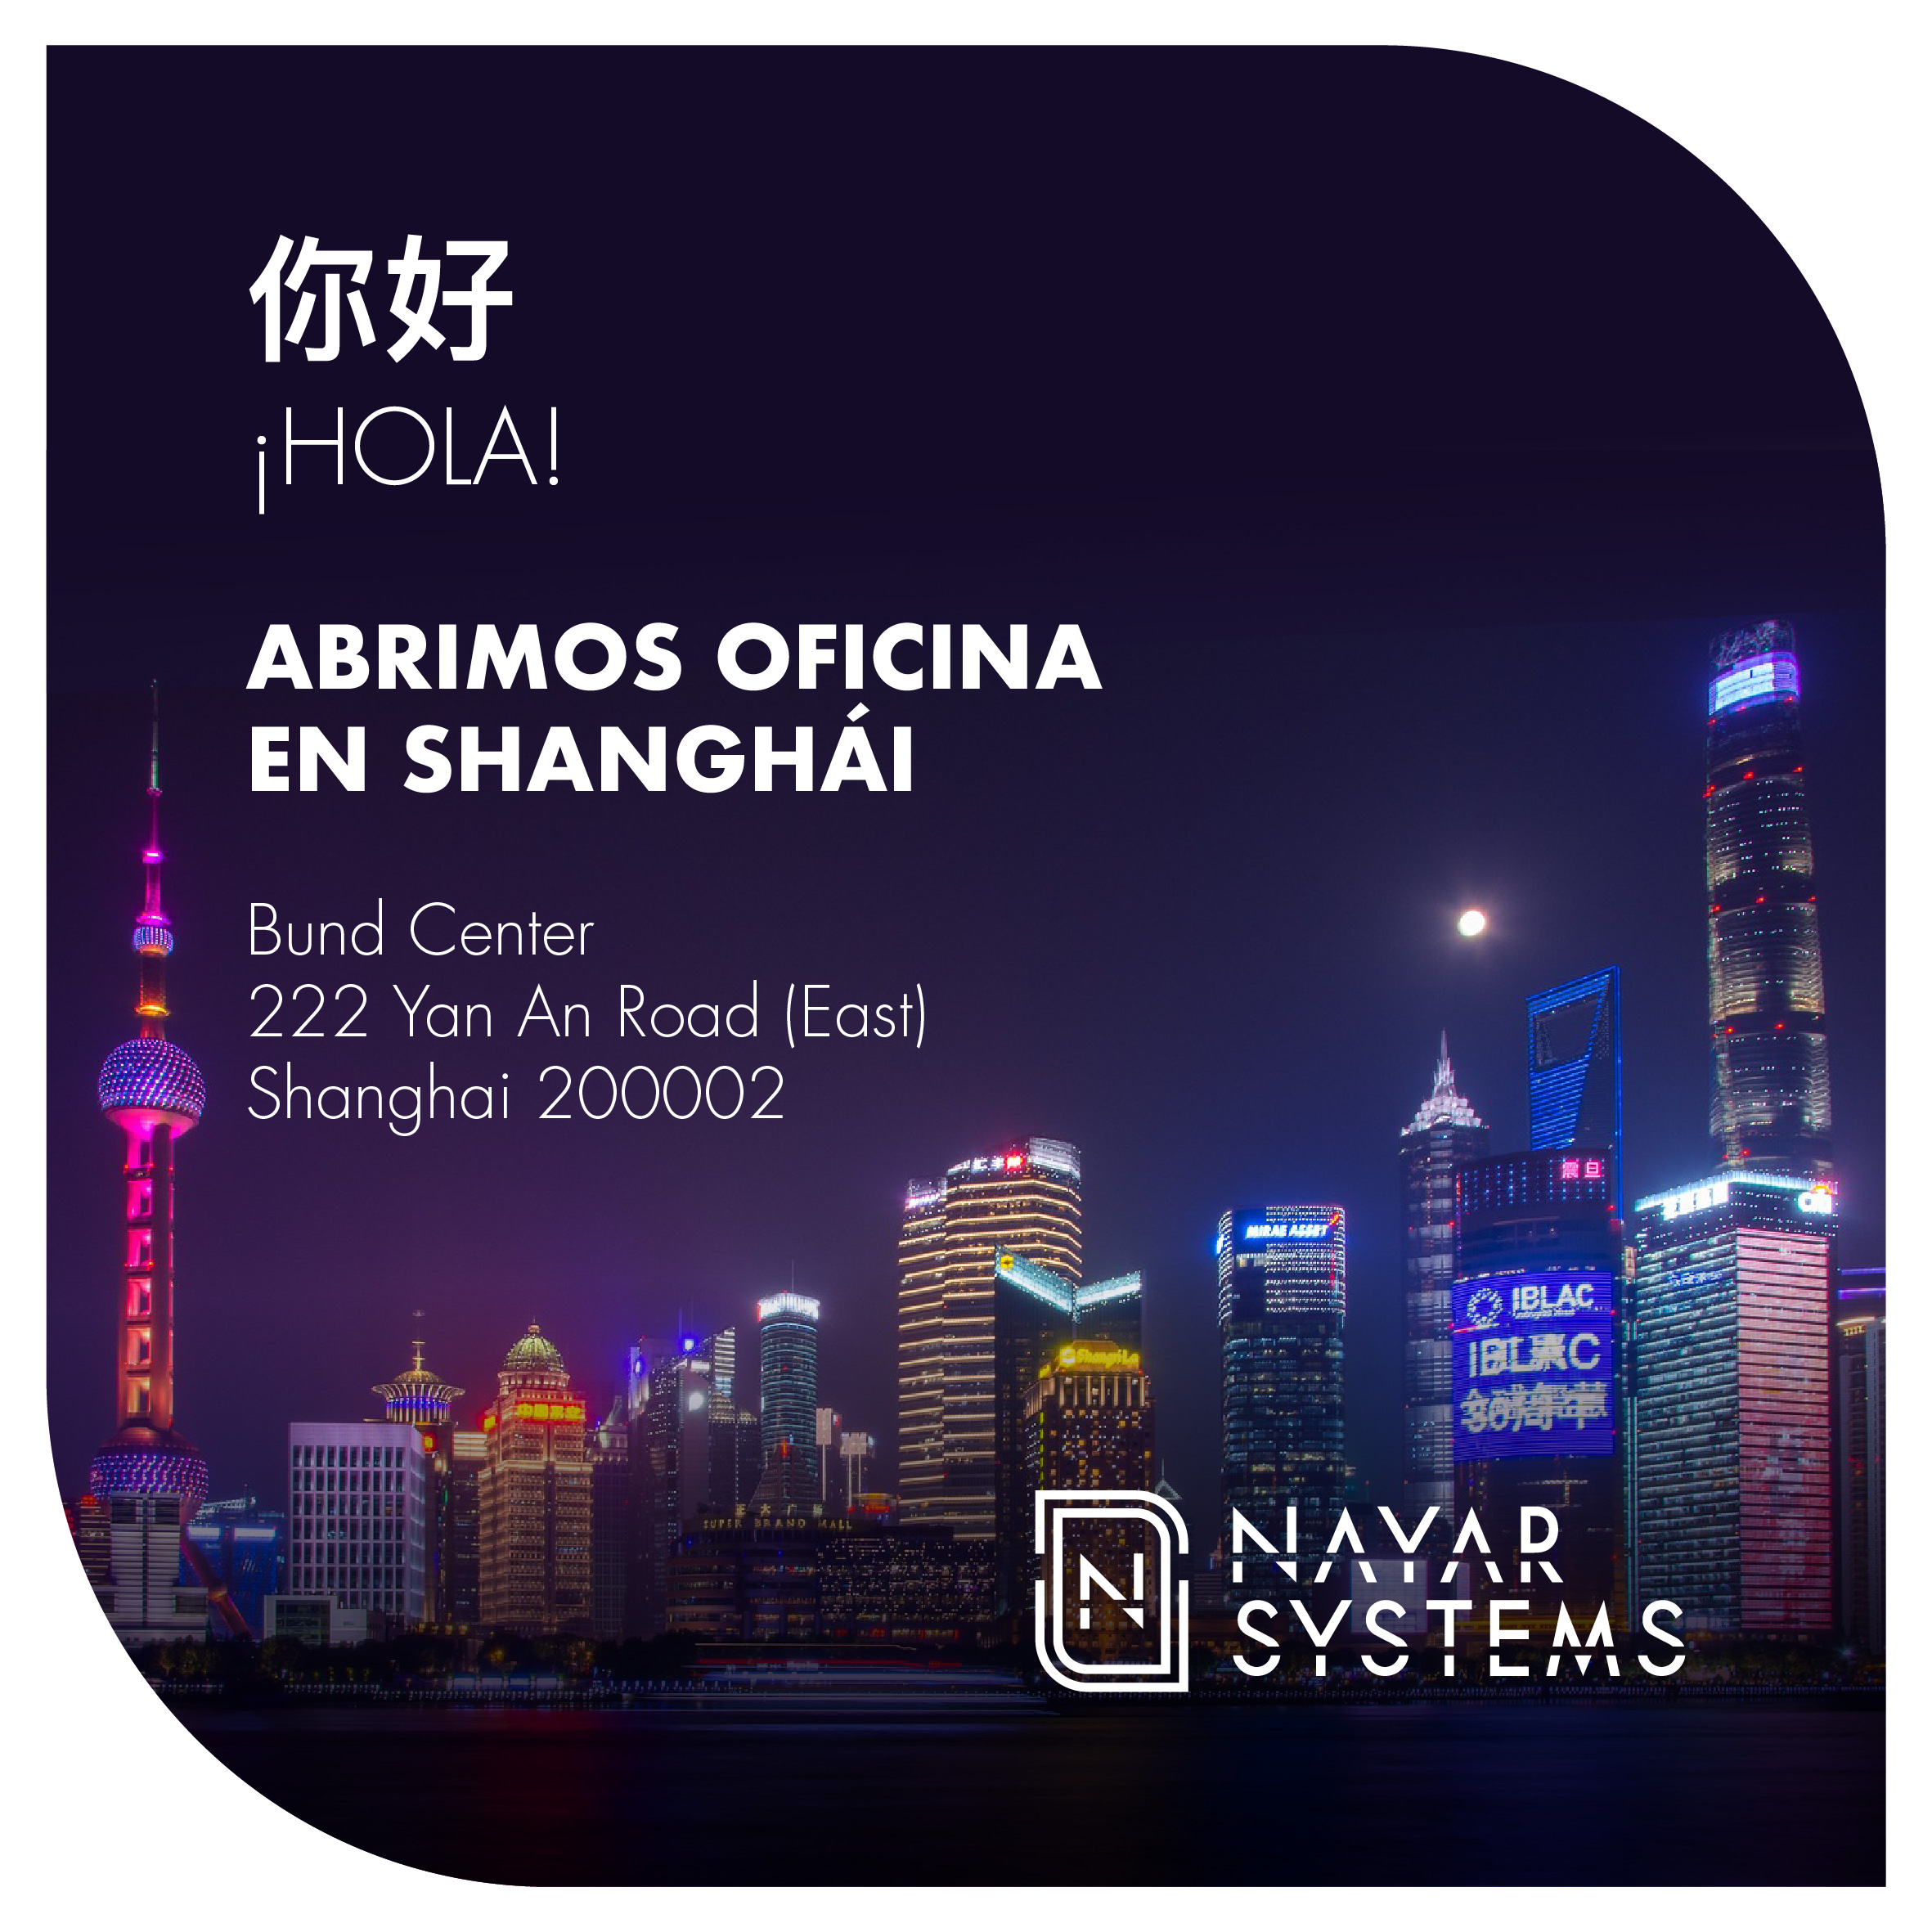 Nayar Systems Oficina Shanghai